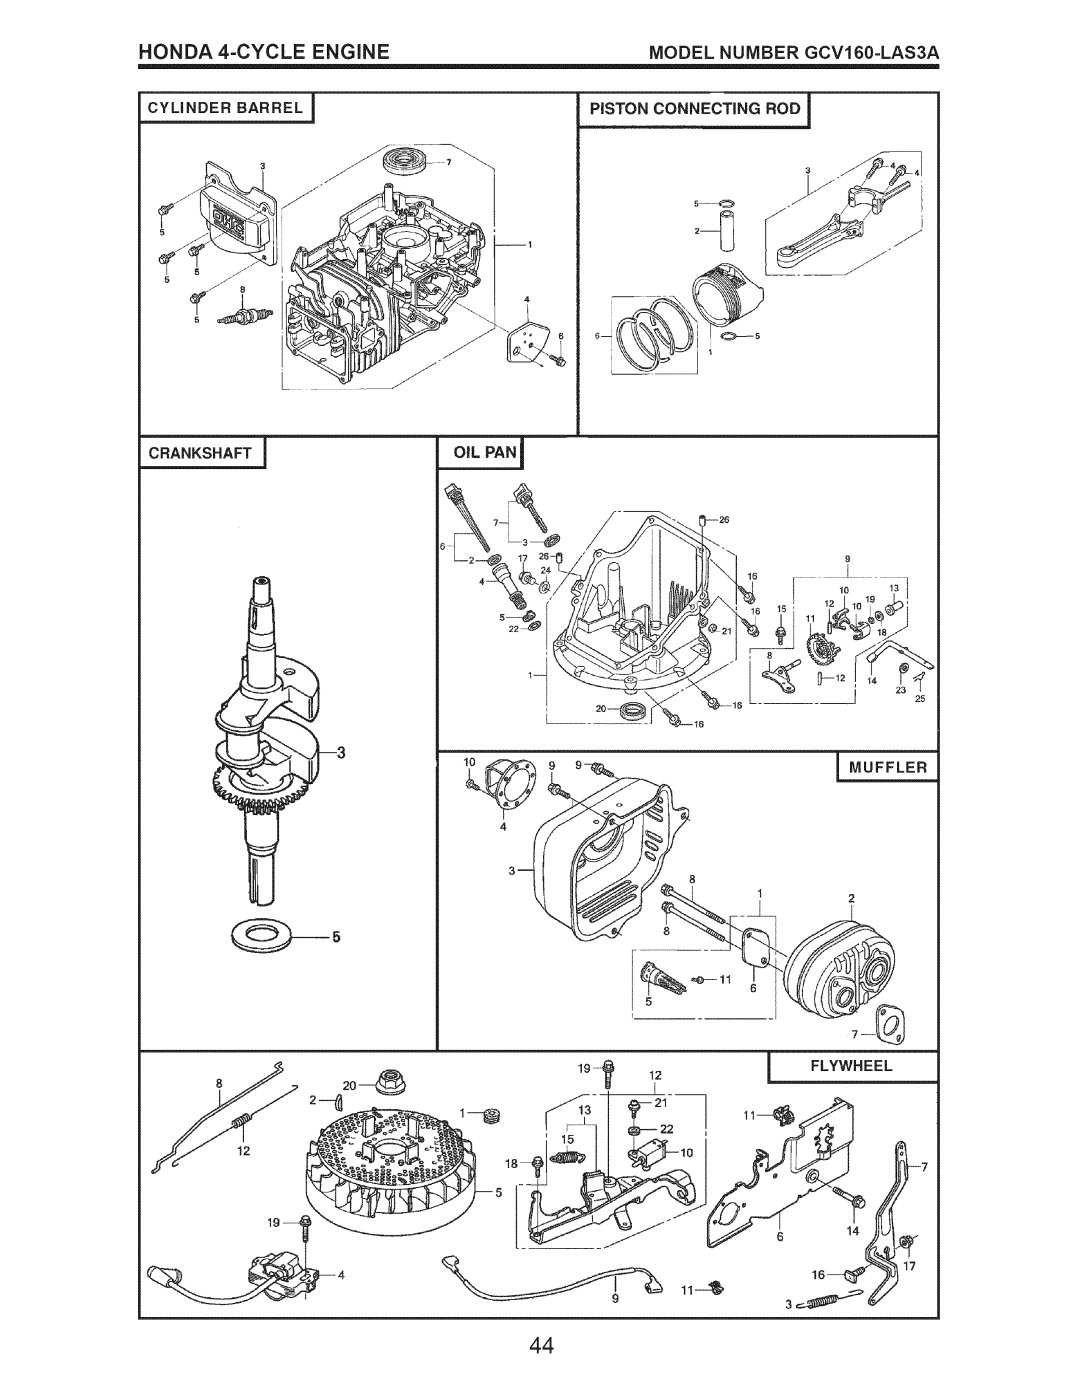 Craftsman 917.376540 manual HONDA 4-CYCLE, Engine, i MUFFLER 